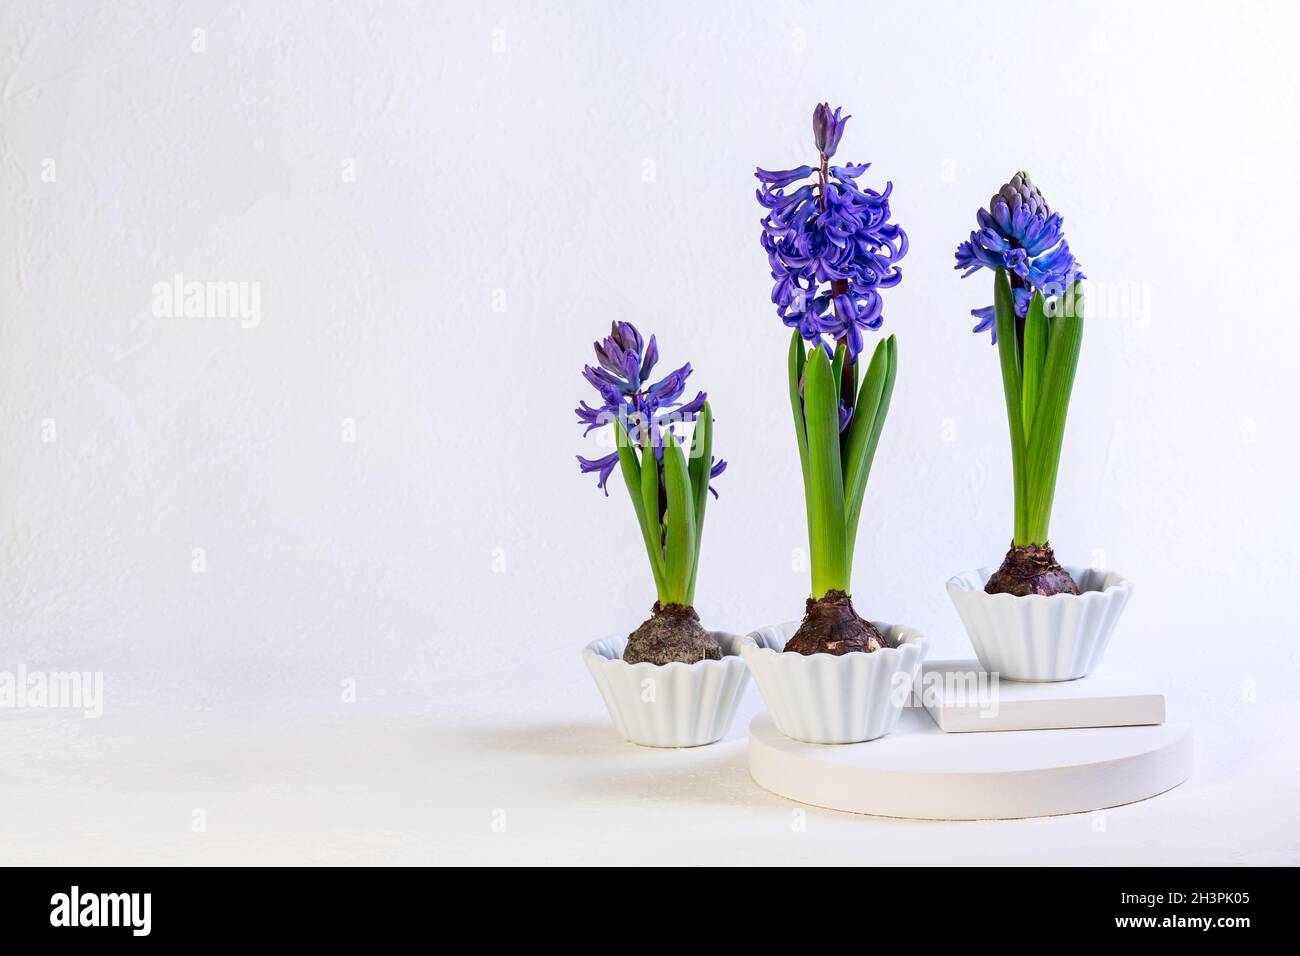 Blue hyacinths in white ceramic bowls. Stock Photo